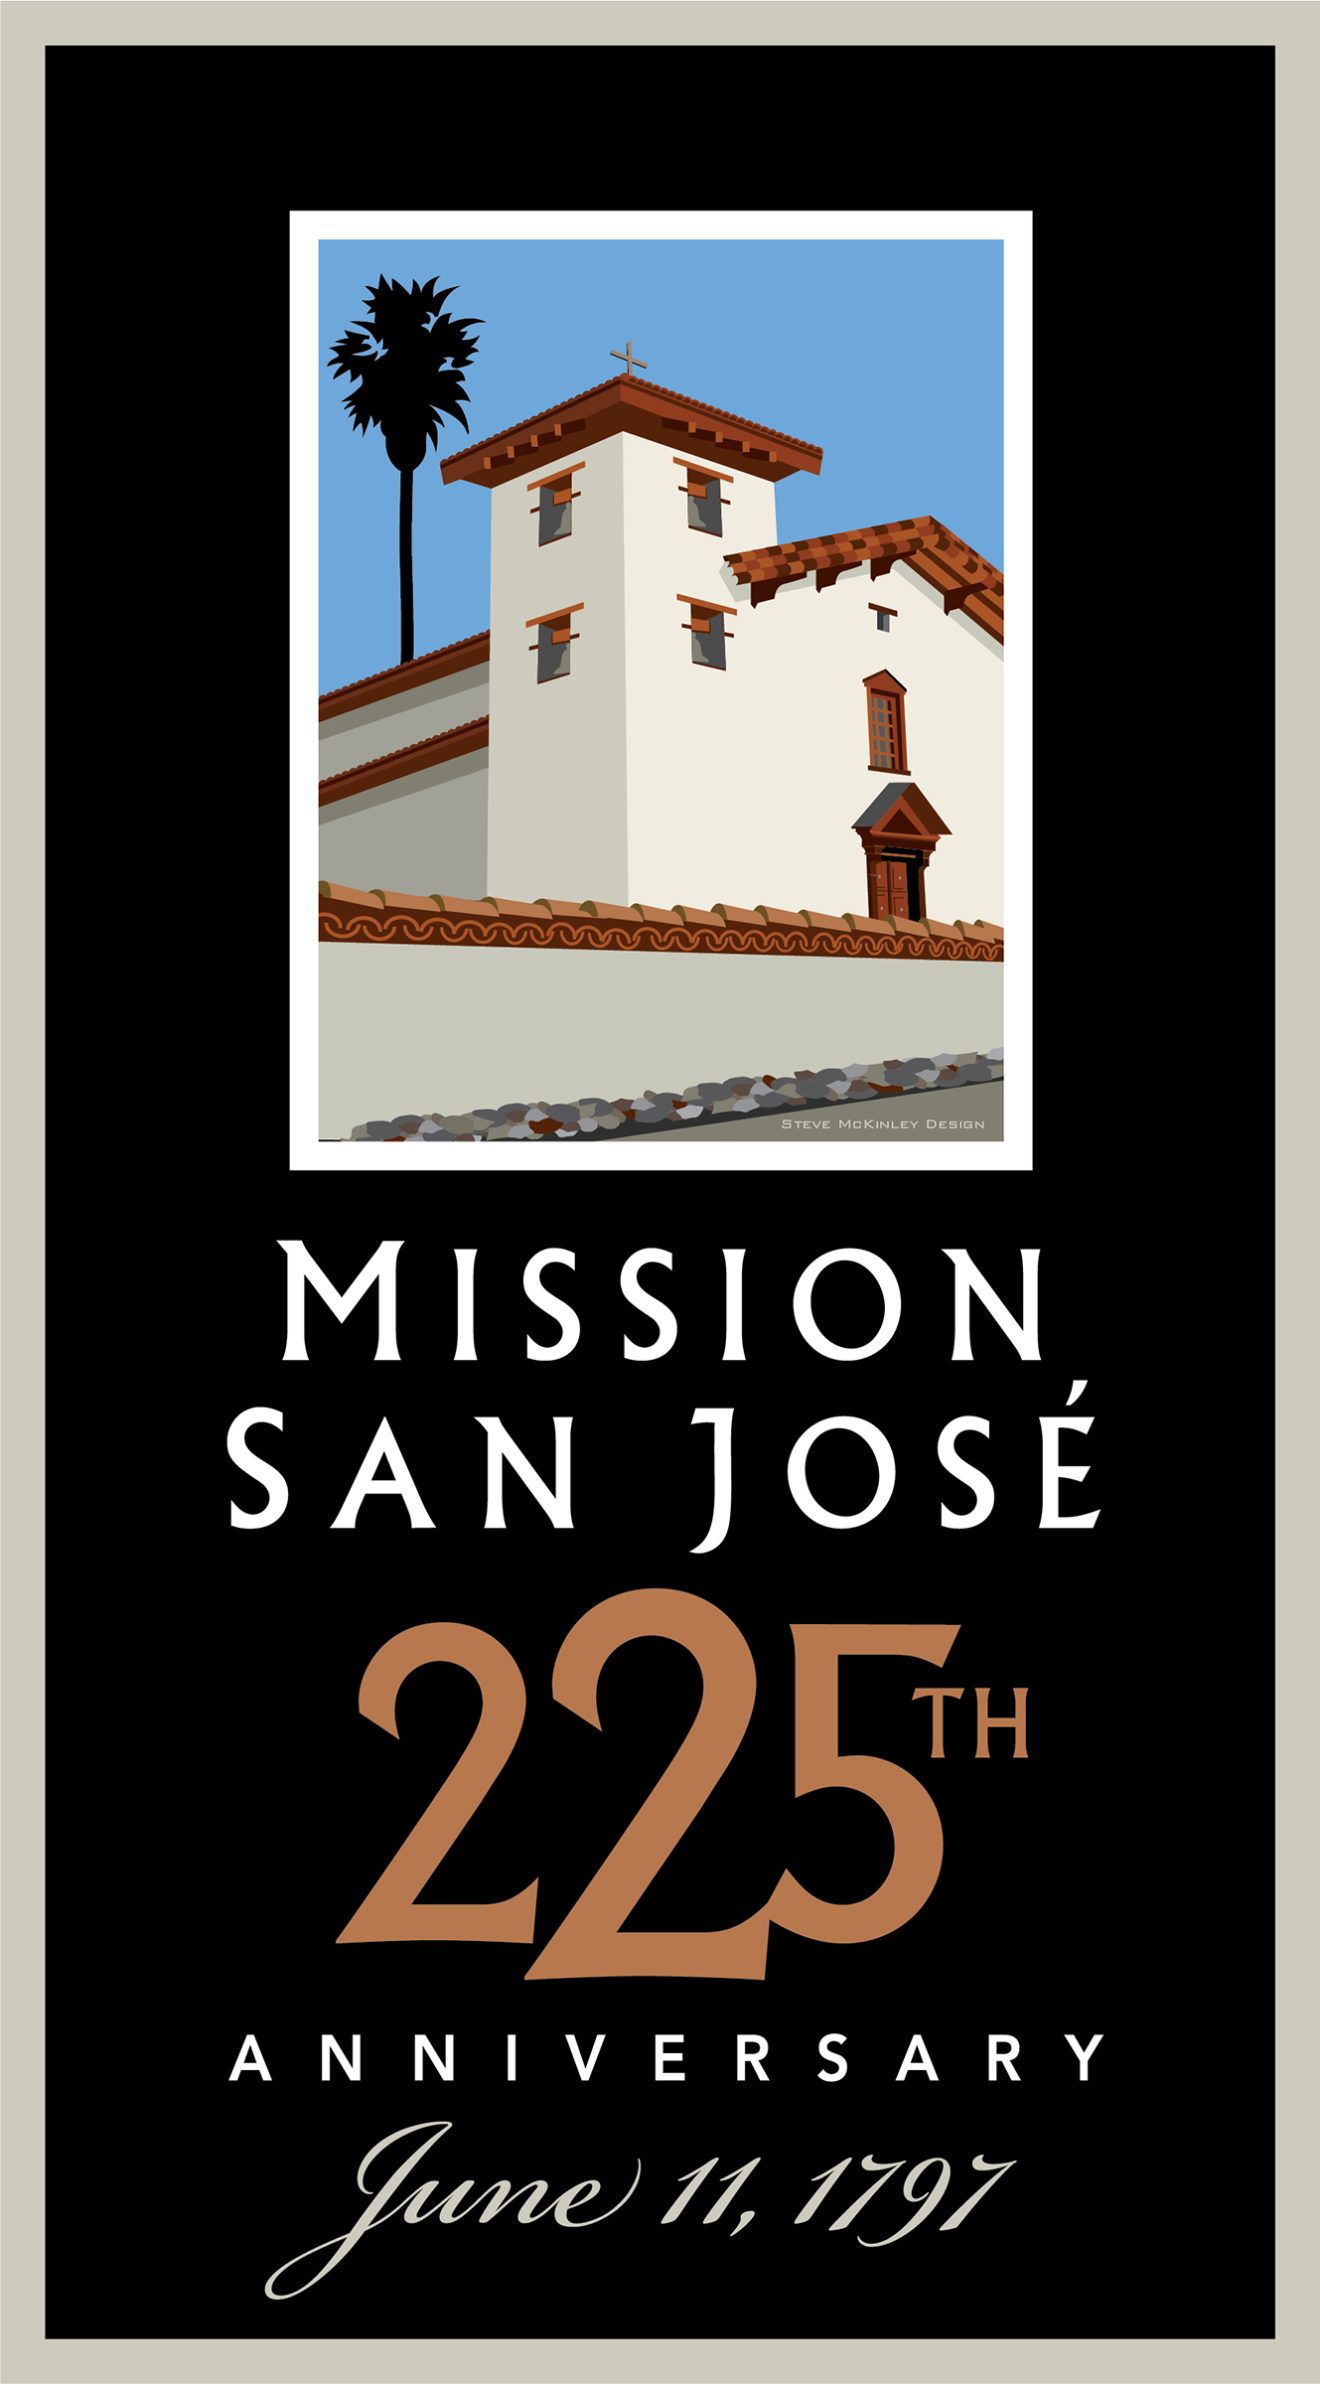 MISSION 225 NEWS